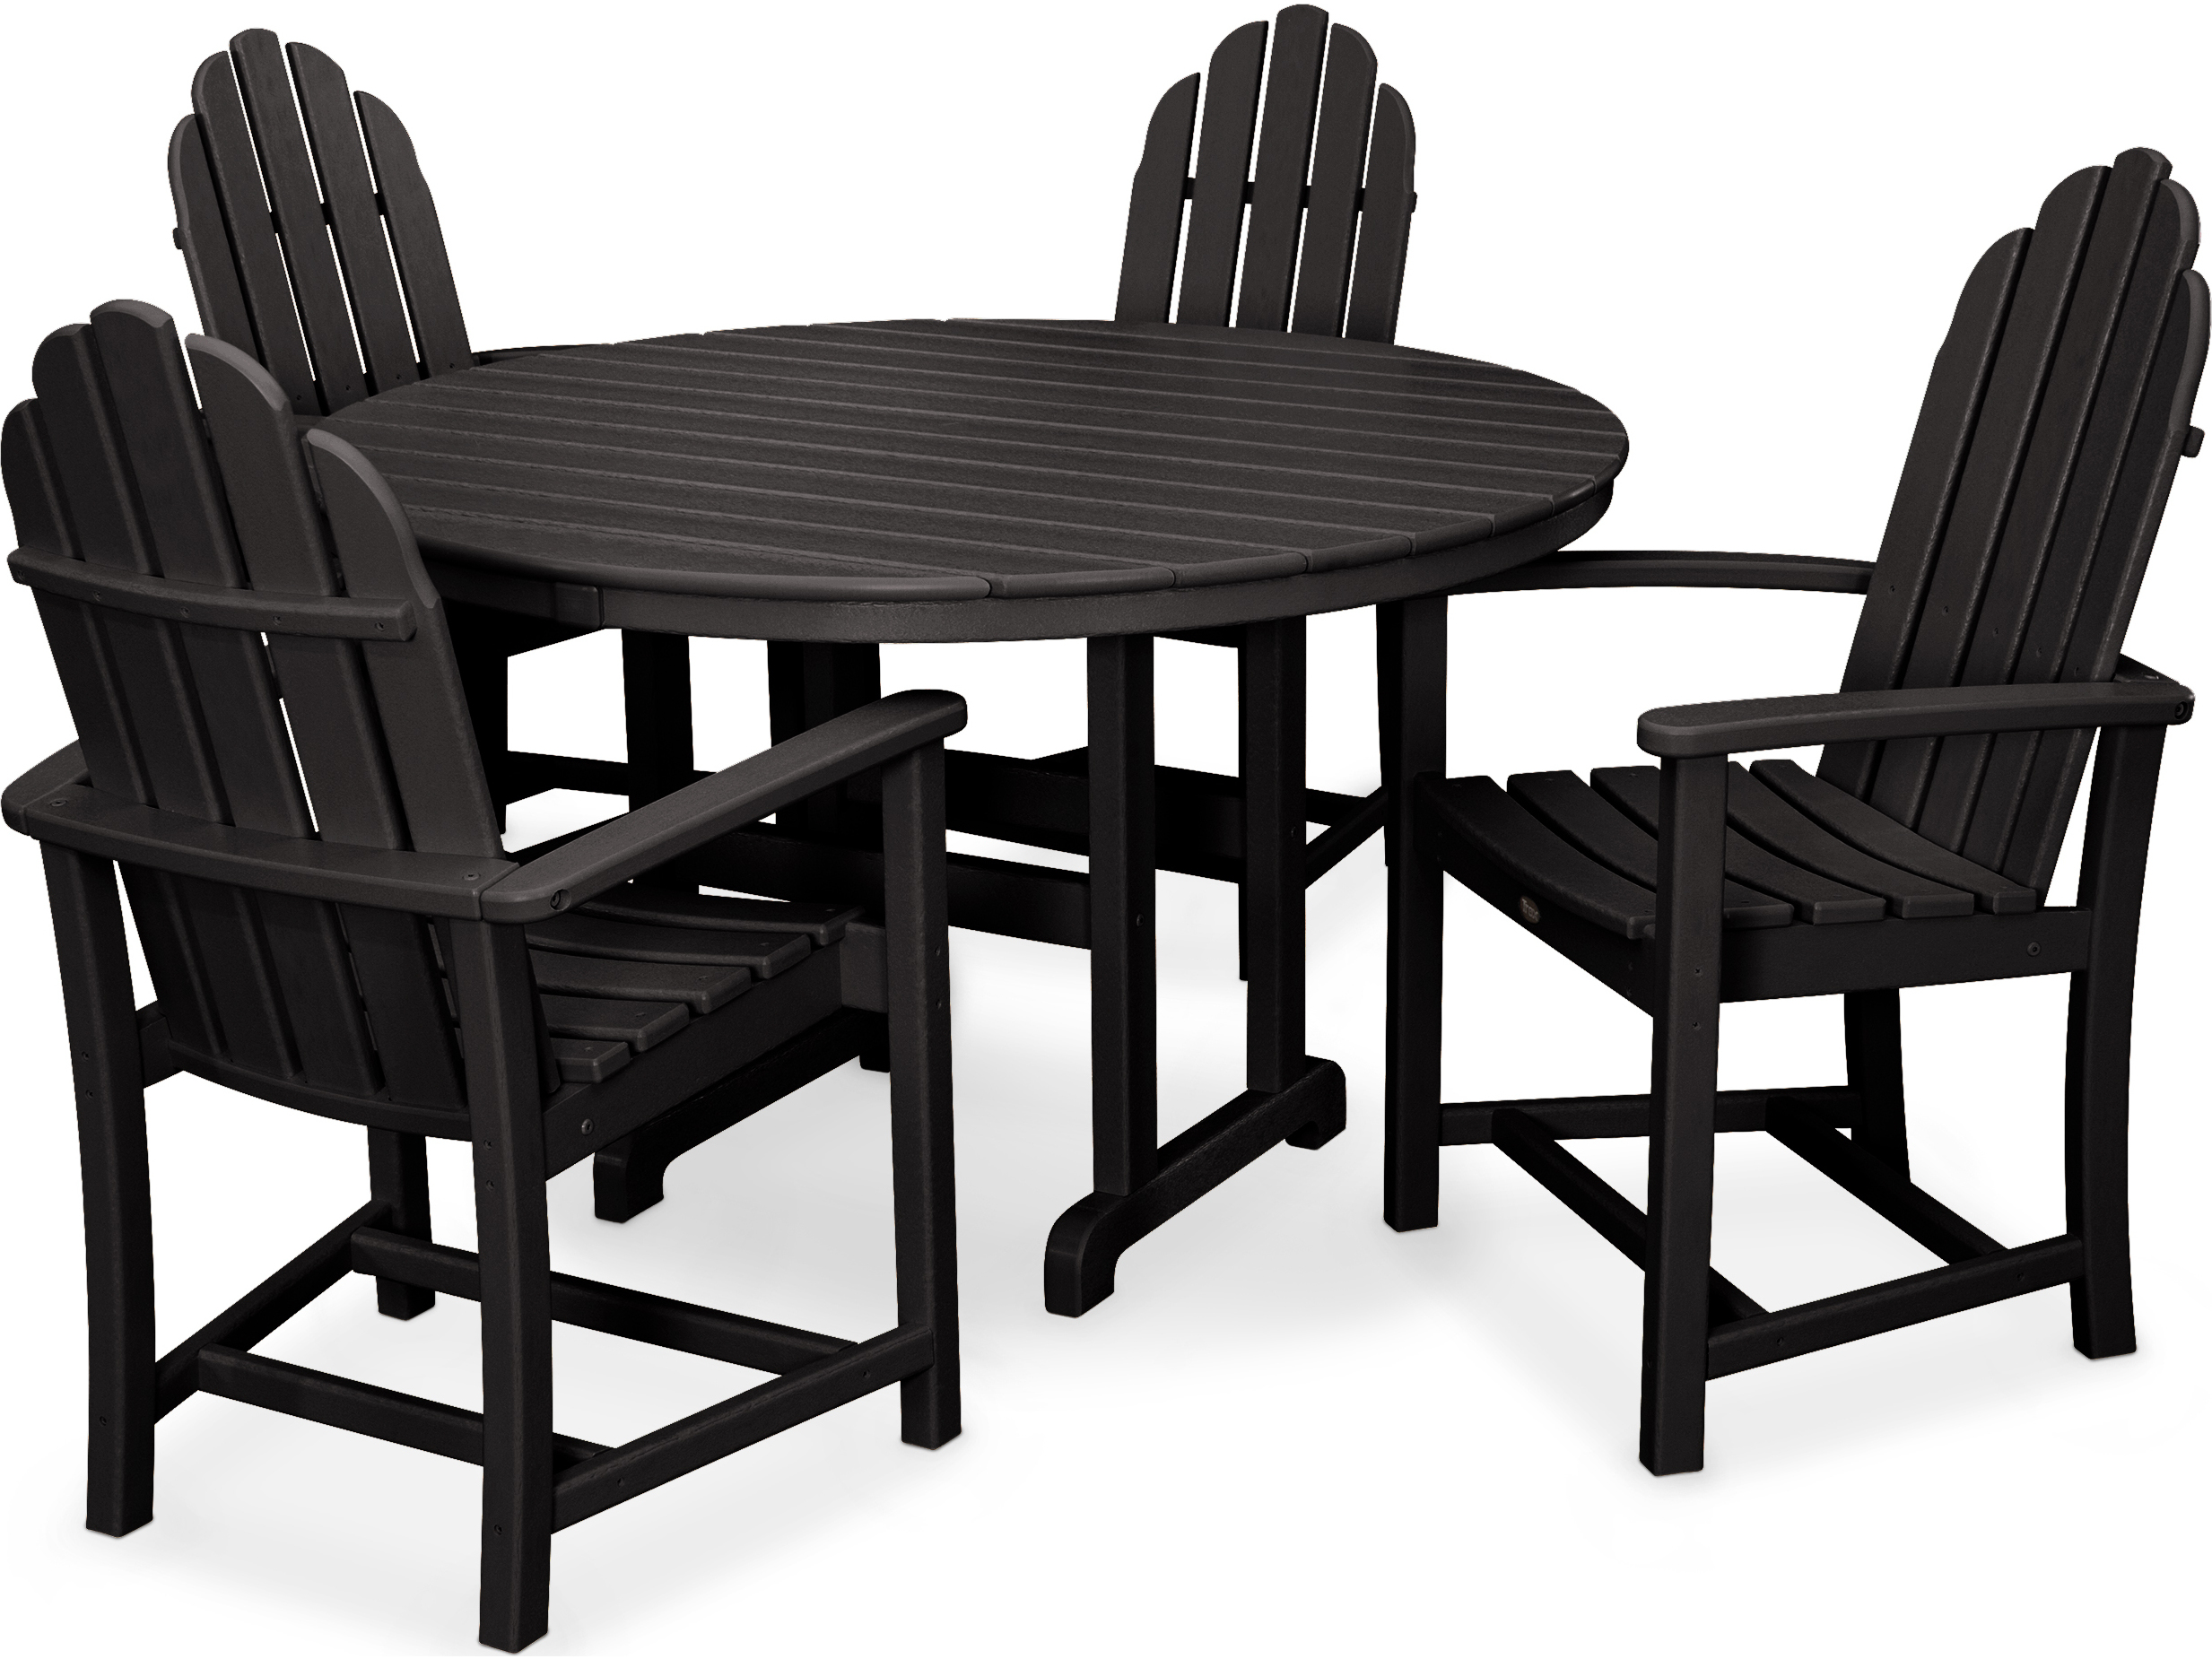 trex outdoor furniture material